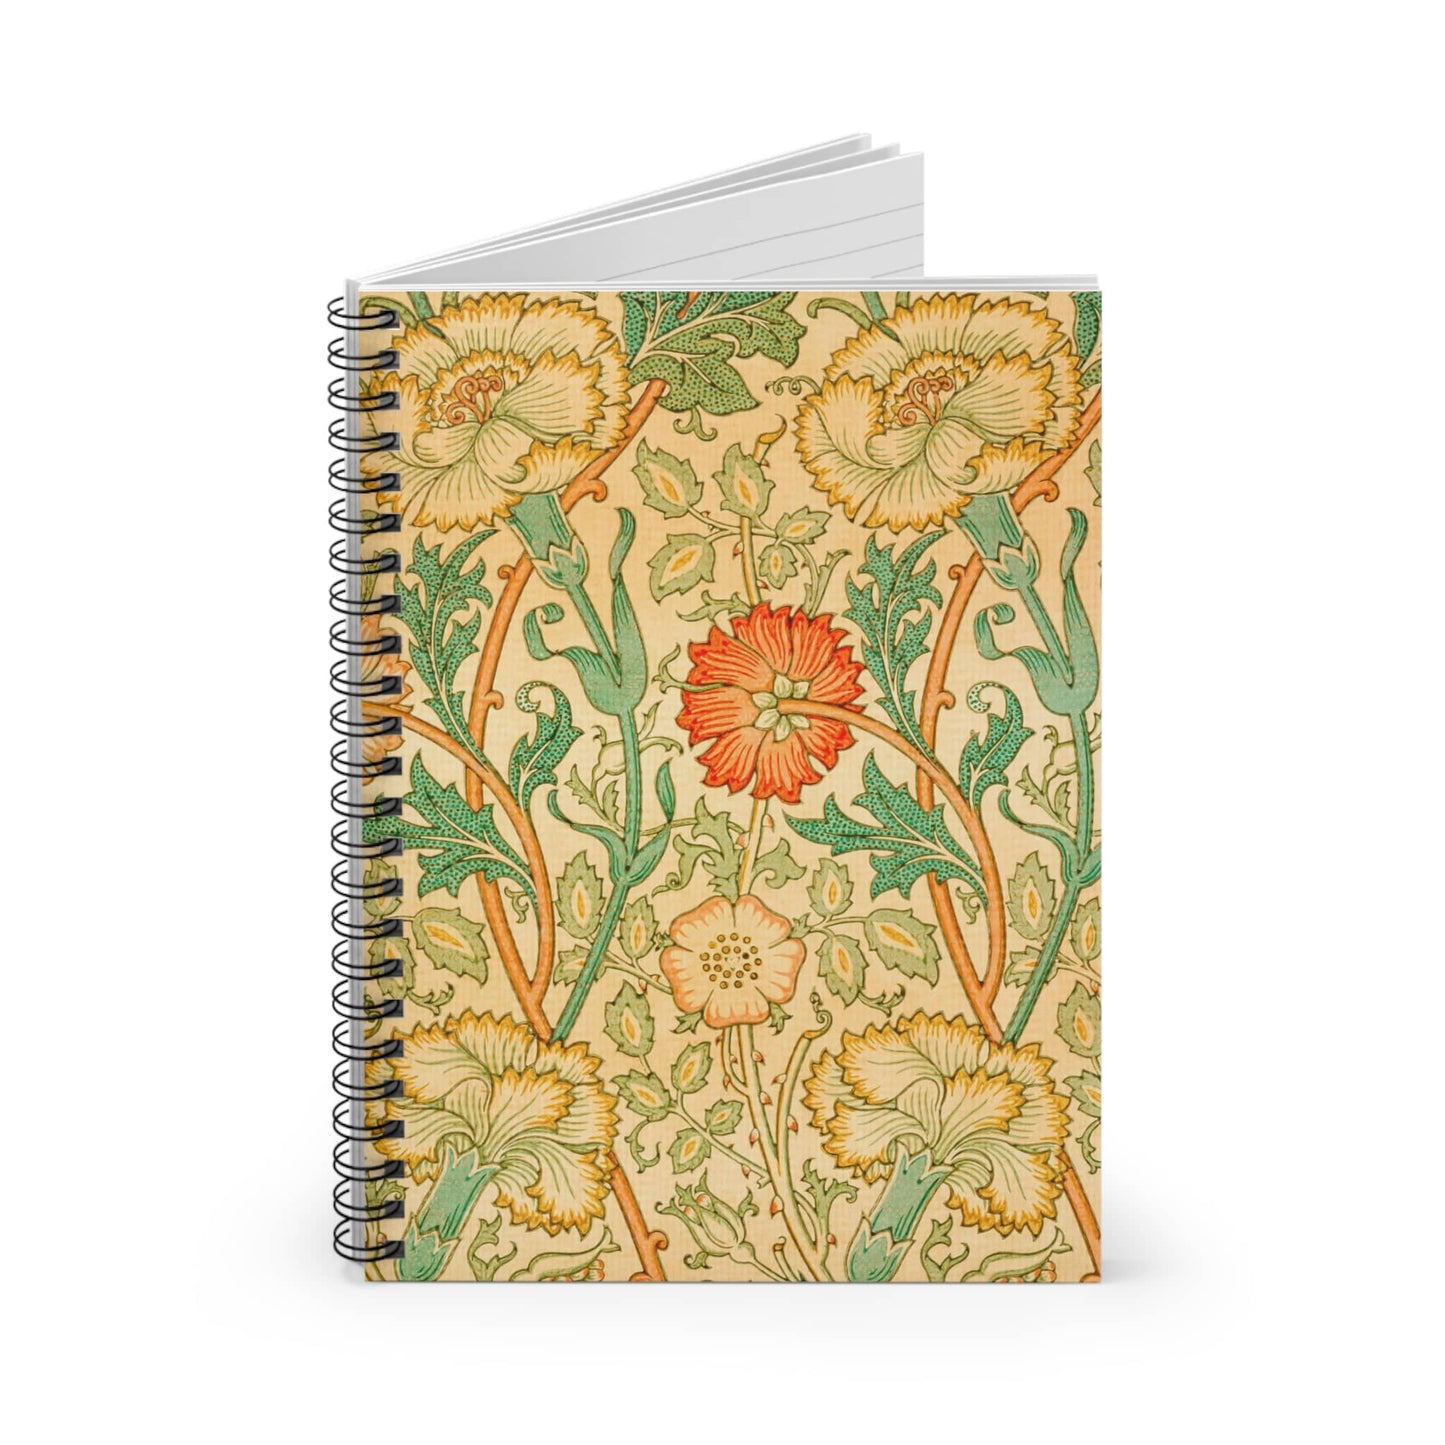 Antique Floral Pattern Spiral Notebook Standing up on White Desk